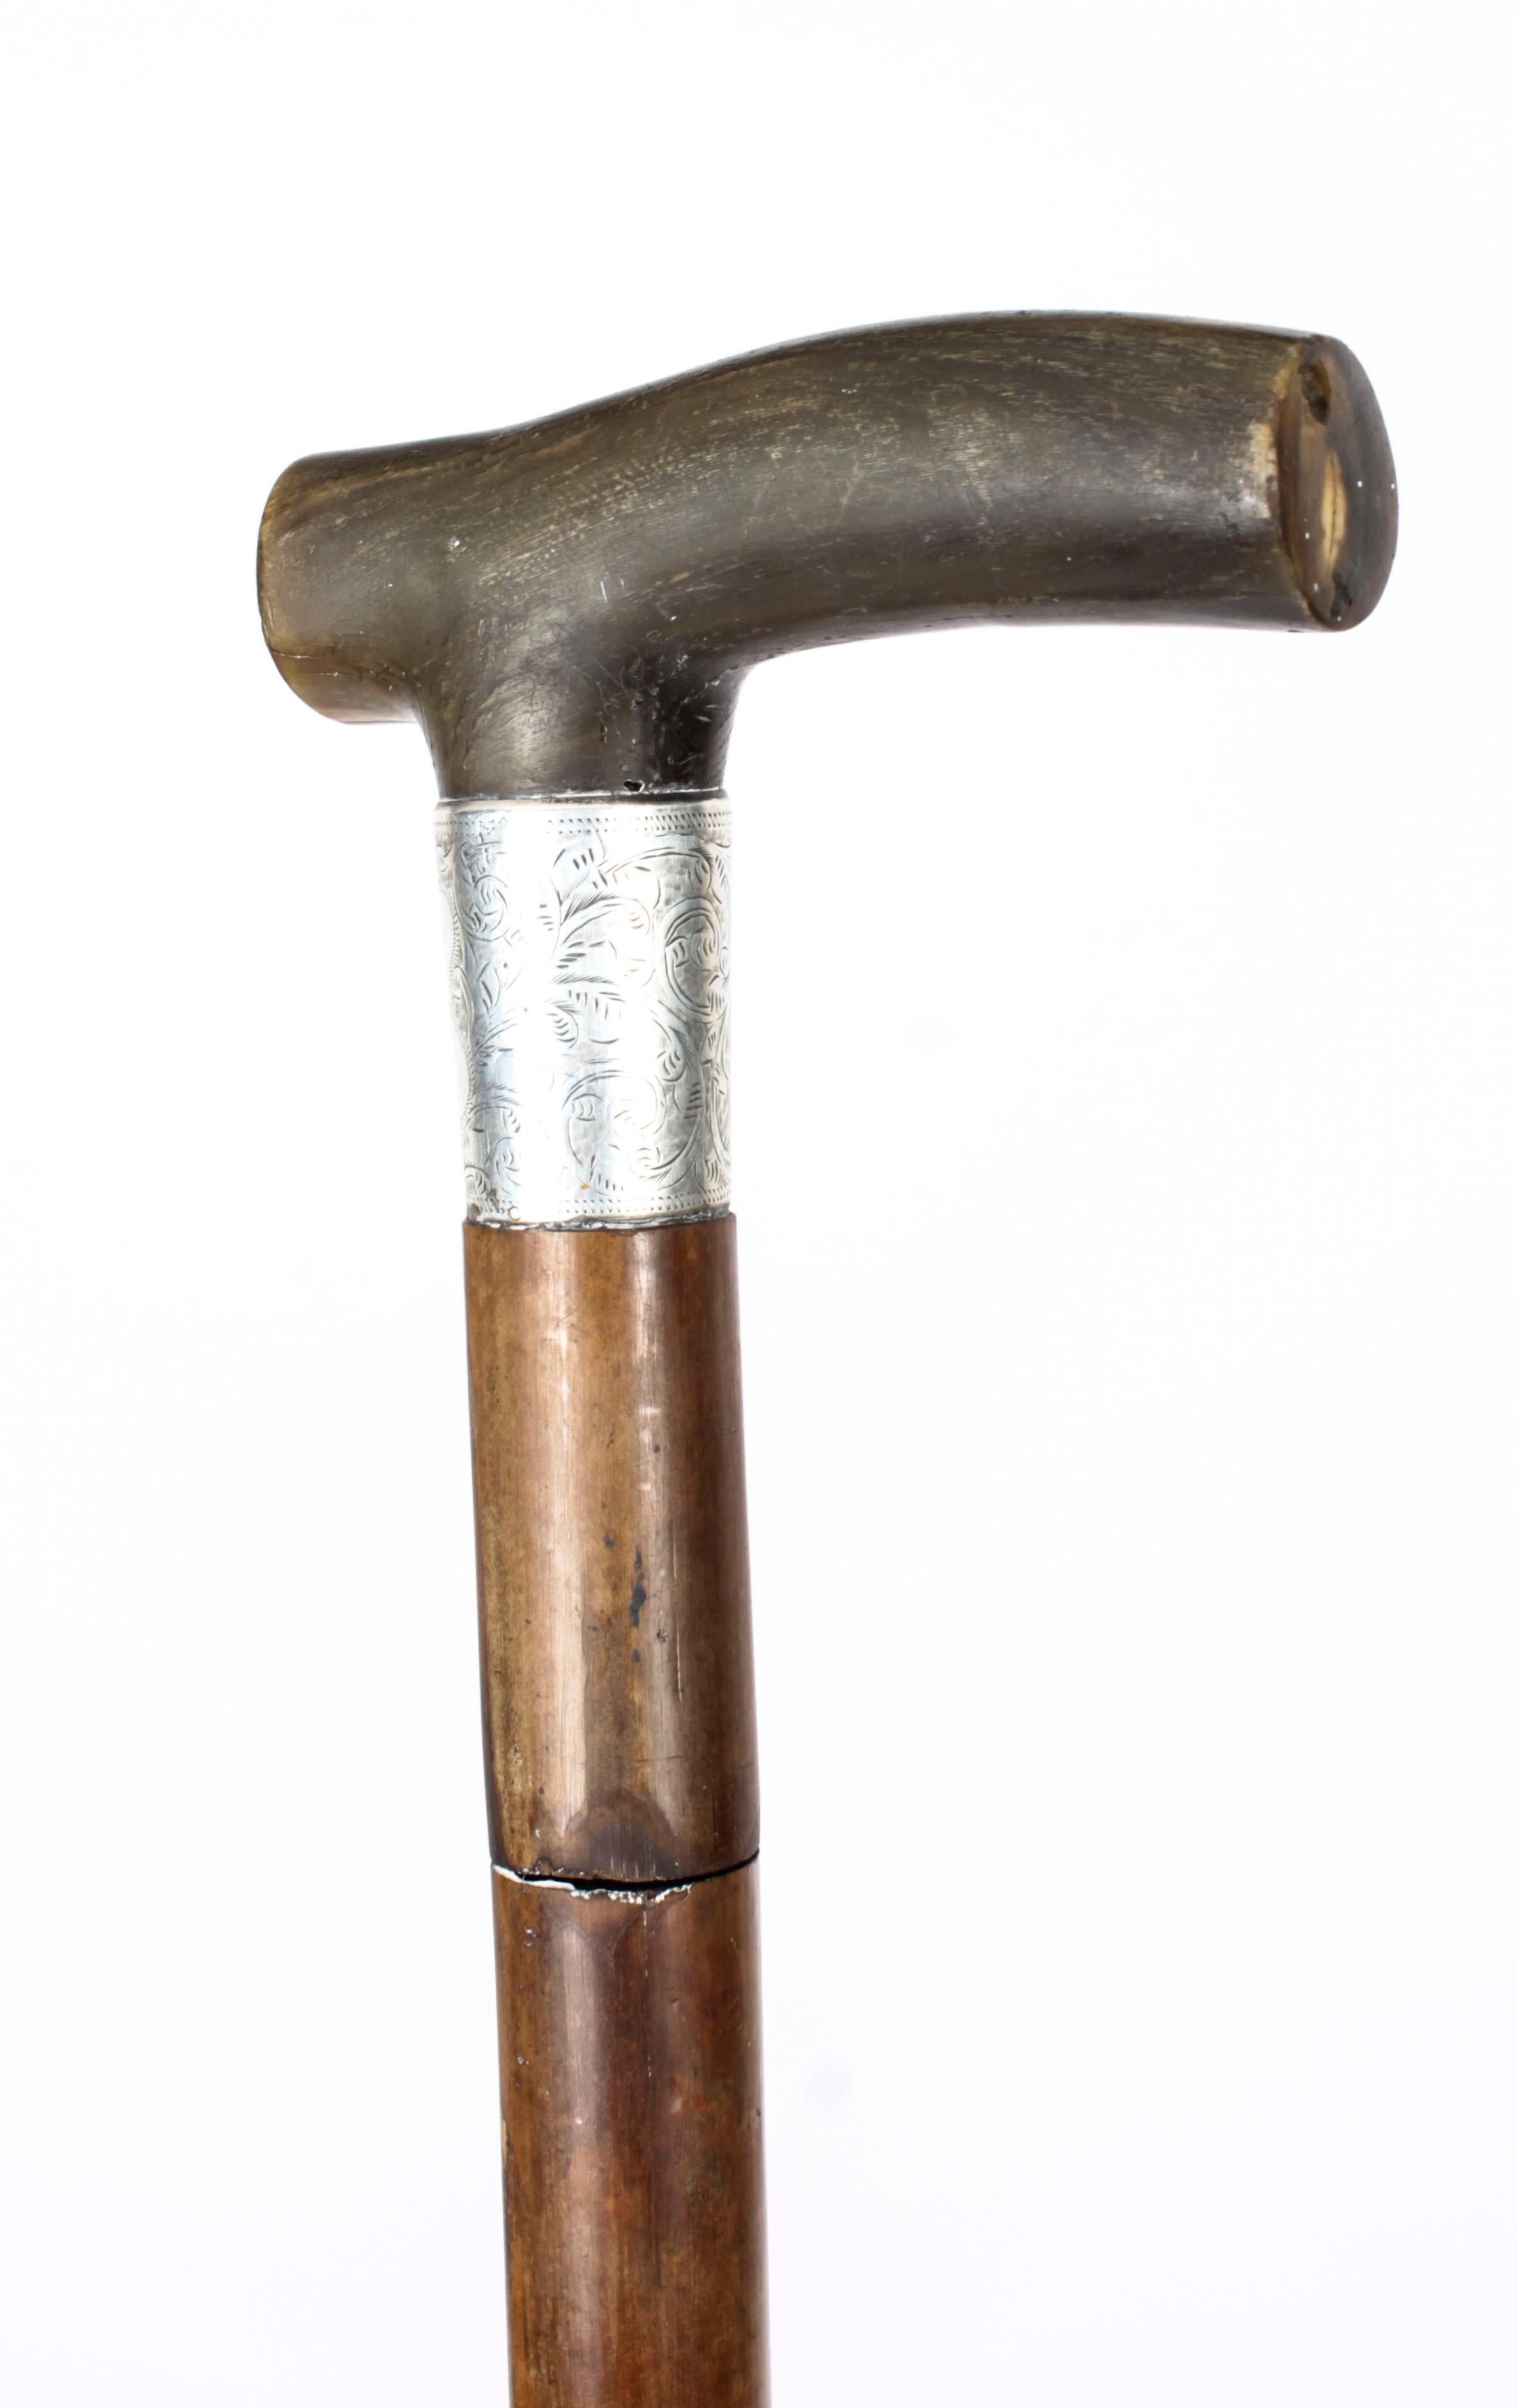 cane sword antique